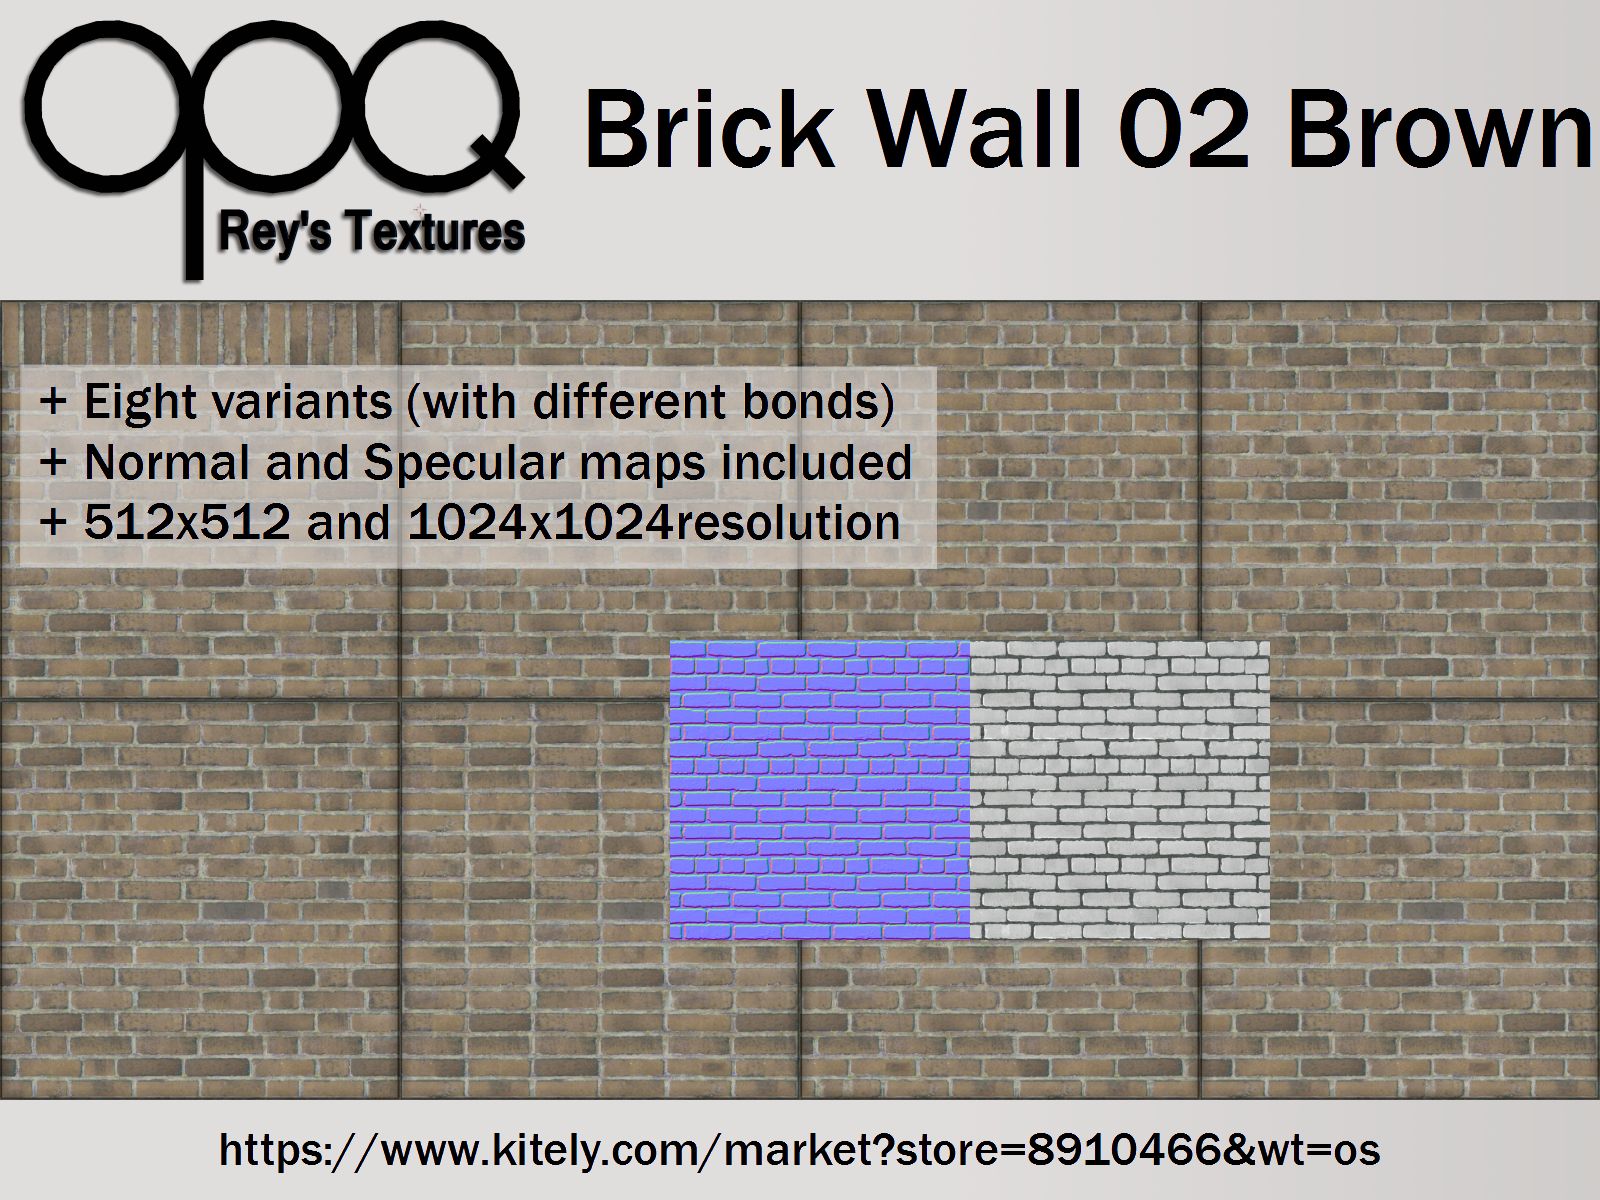 Rey's Brick Wall 02 Brown Poster Kitely.jpg